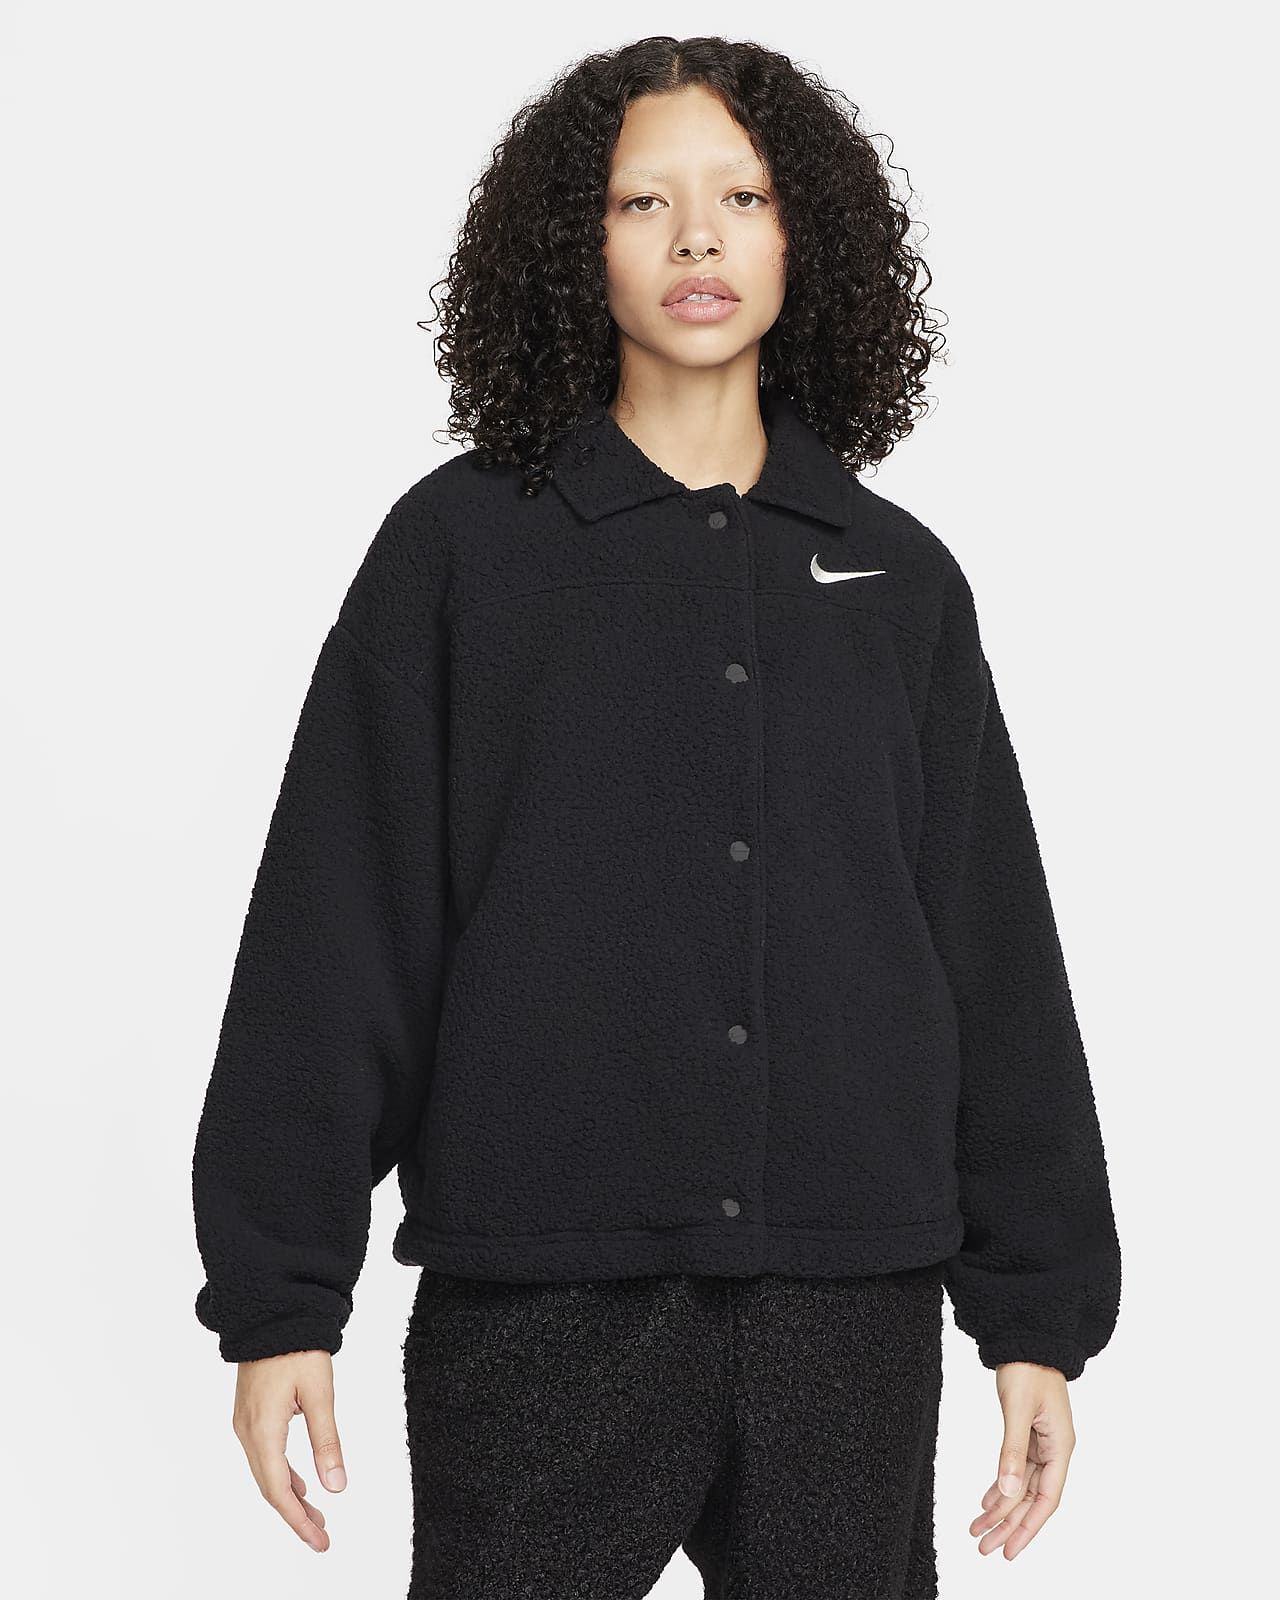 Nike Sportswear Women's Collared High-Pile Fleece Jacket. Nike.com | Nike (US)